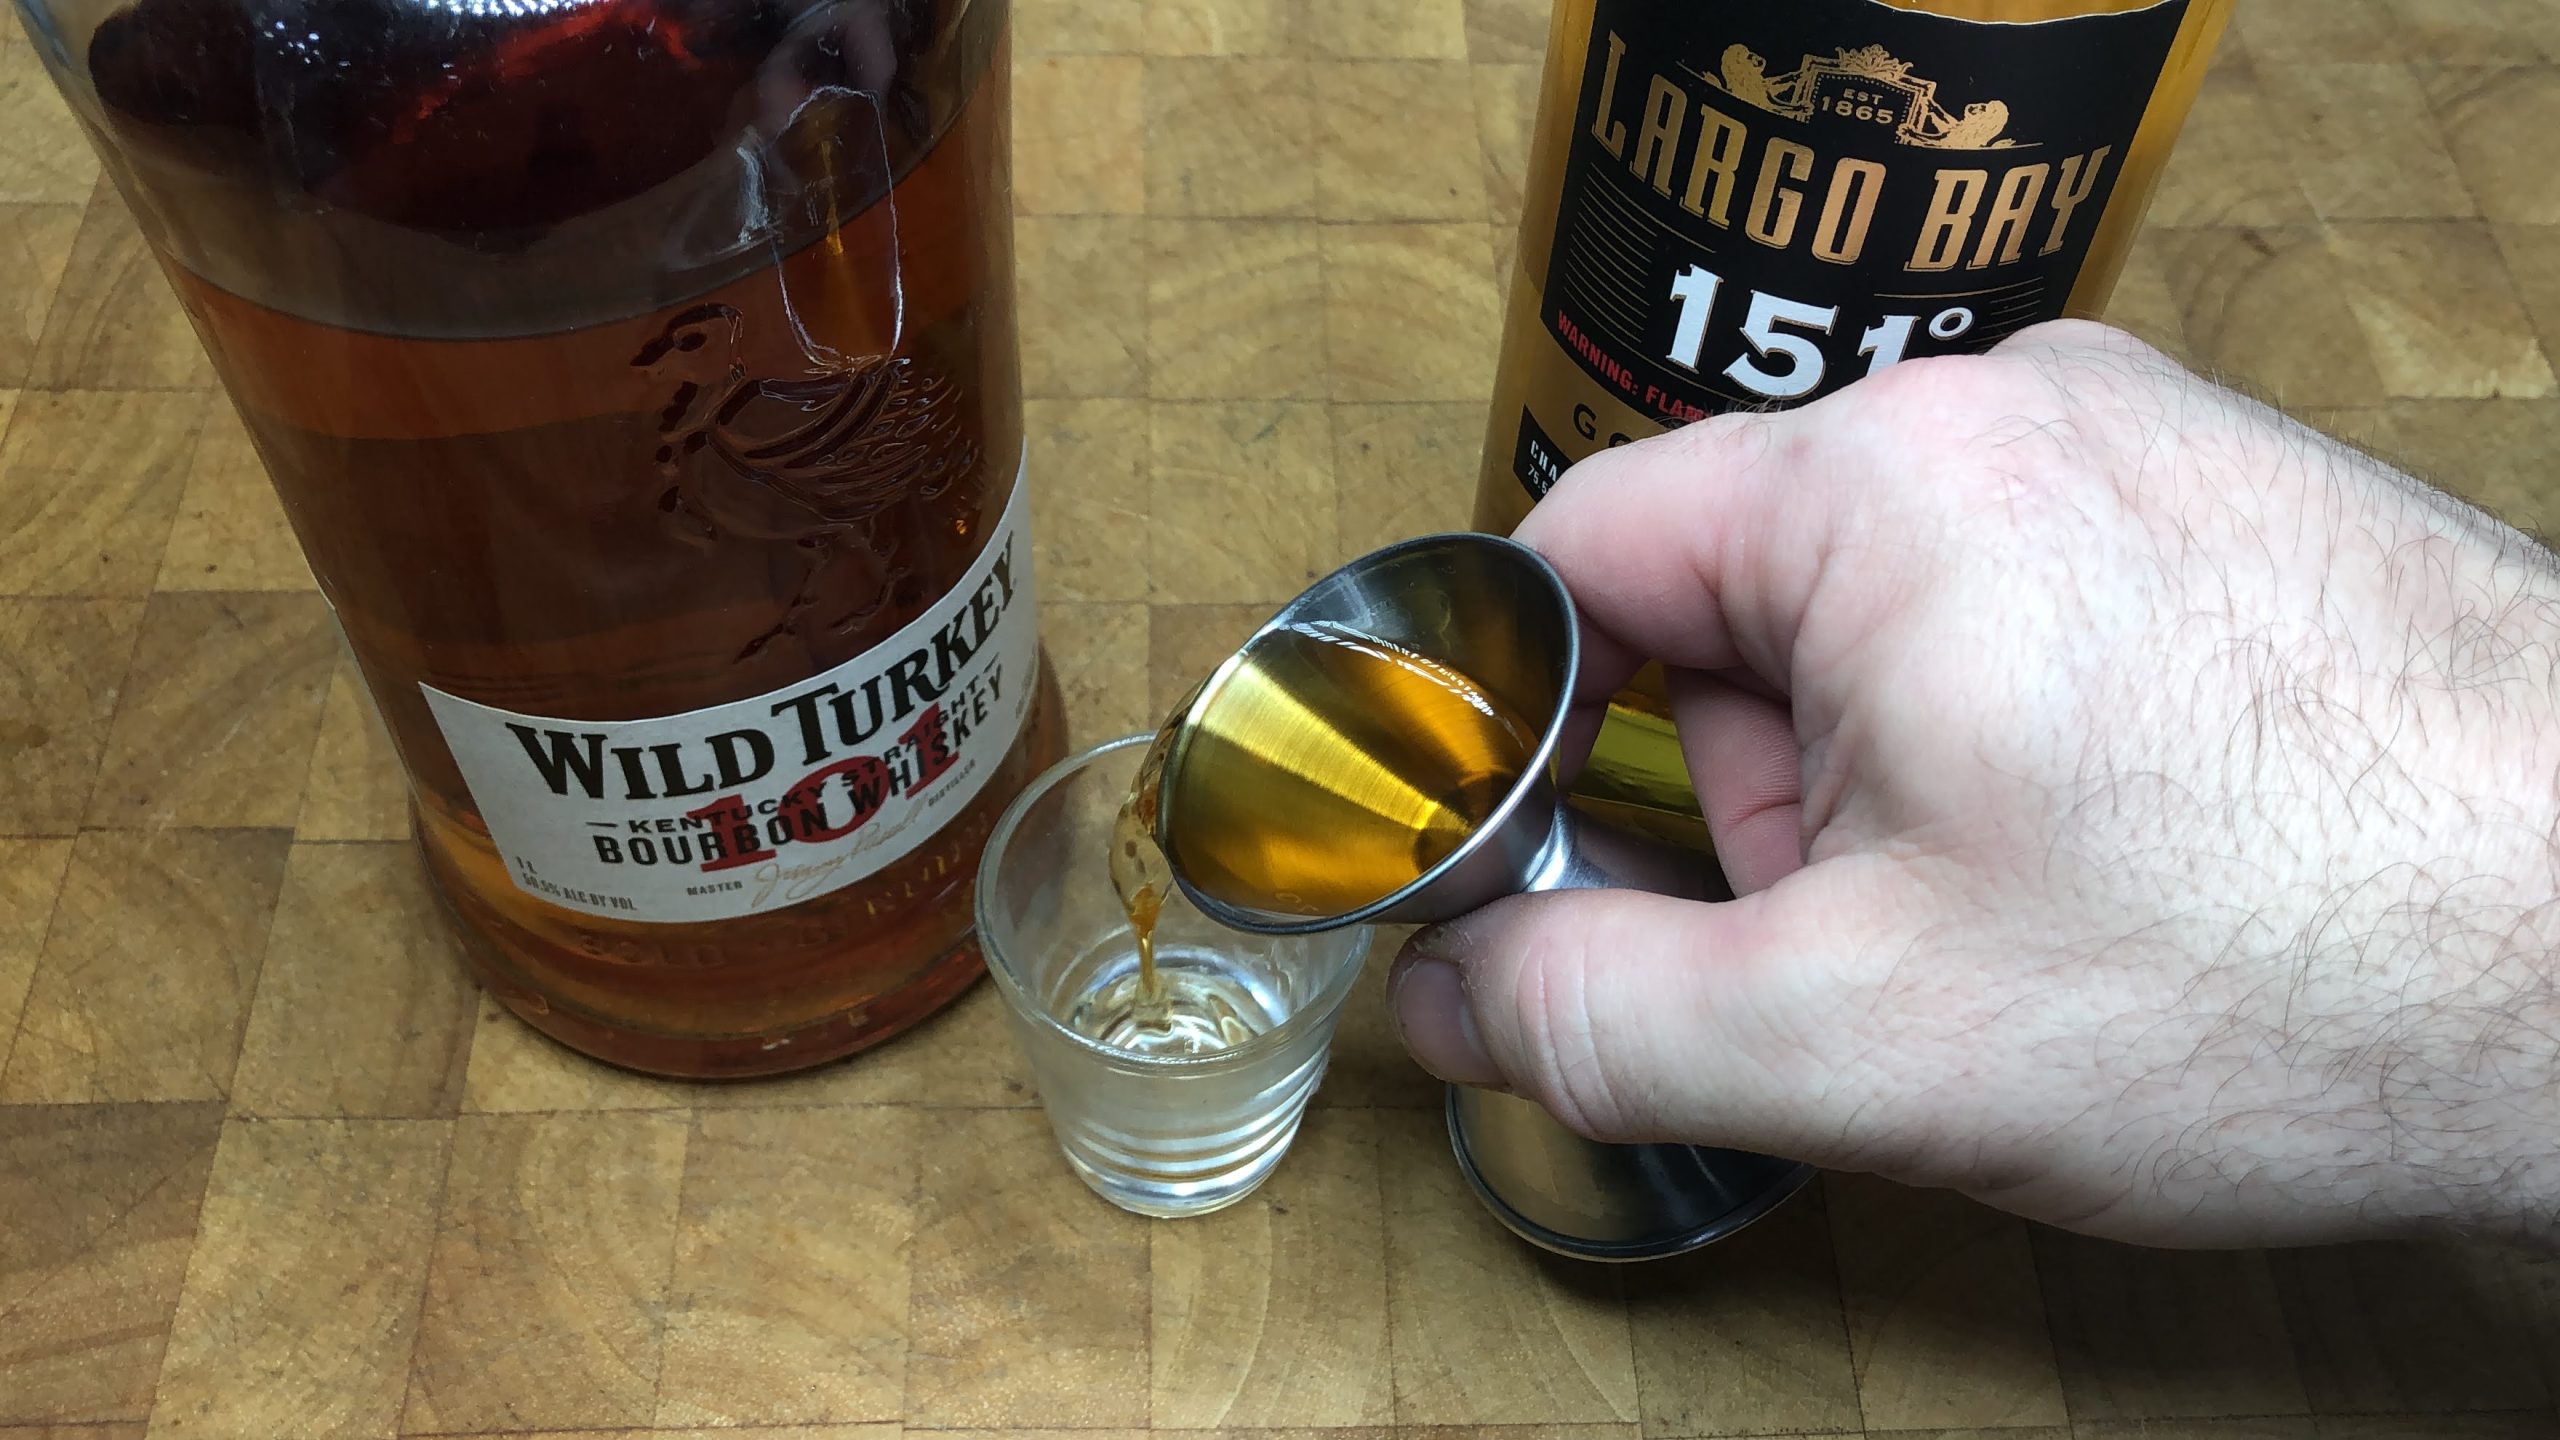 Pouring wild turkey into a shot glass.